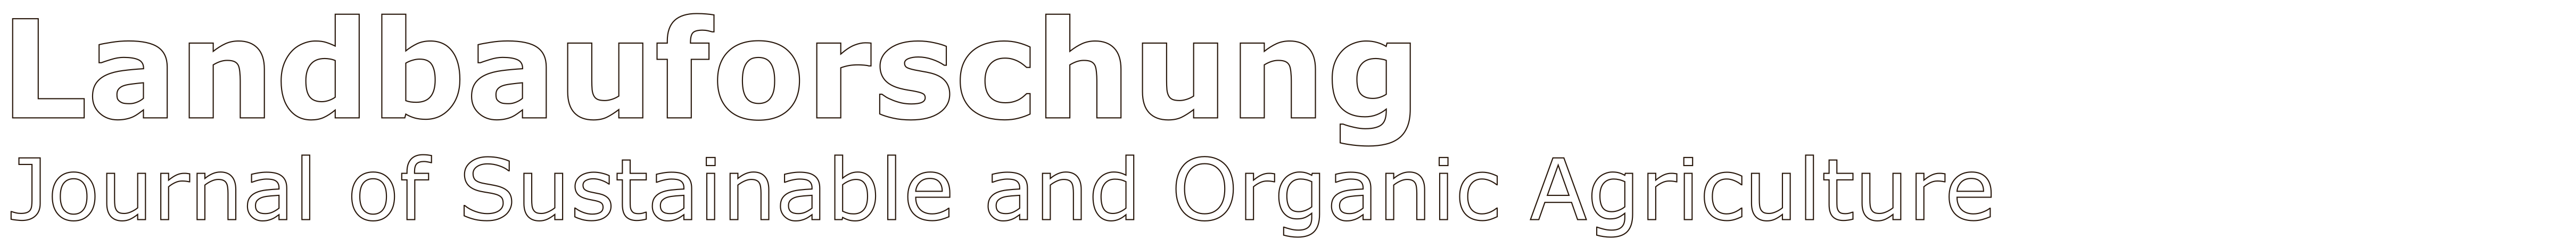 text logo Landbauforschung